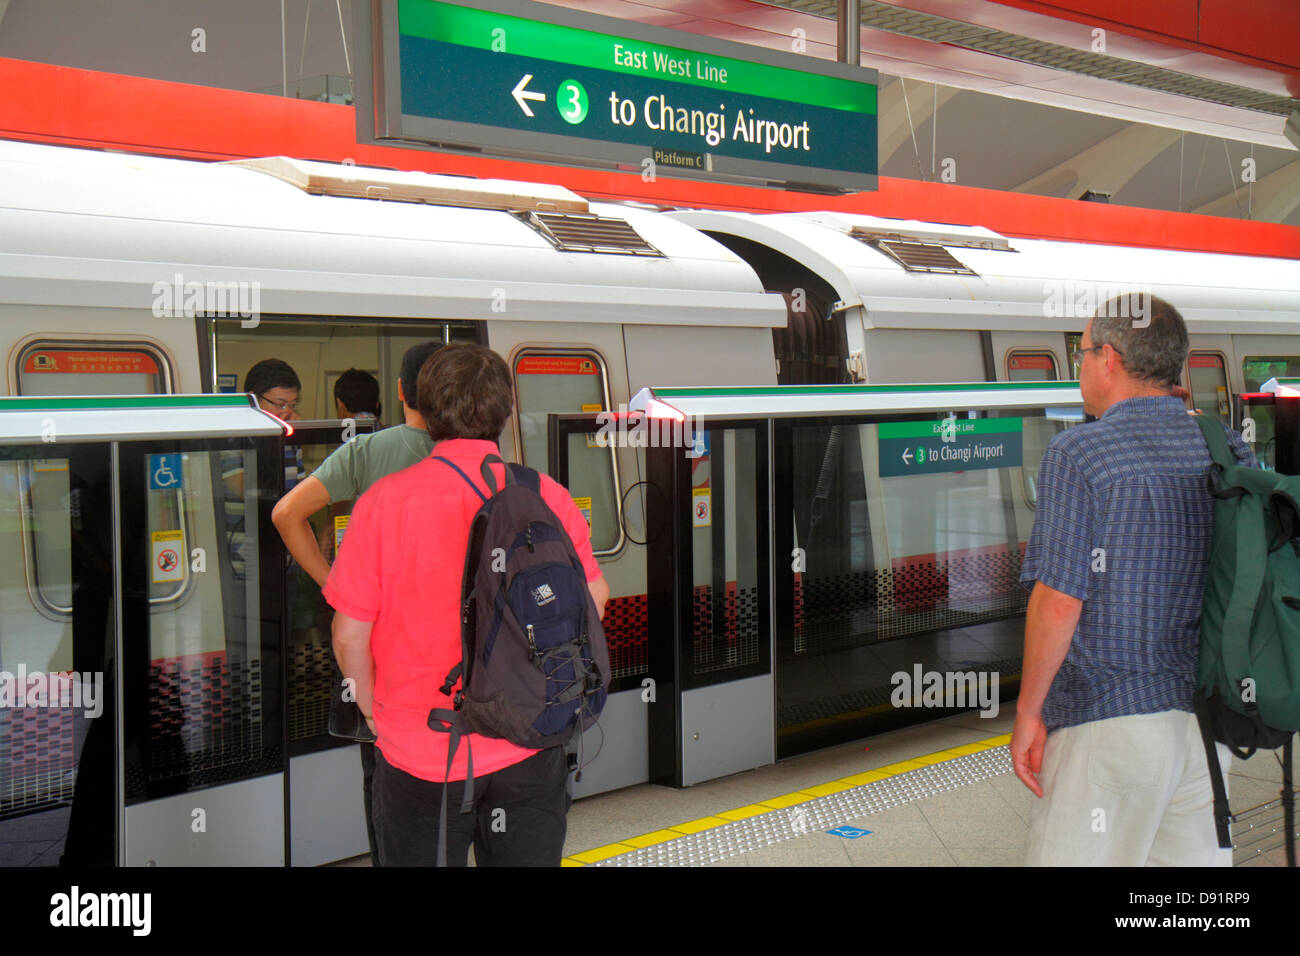 Singapur Tanah Merah MRT Station, East West Line, U-Bahn Zug, Fahrer, Pendler, Asian Mann Männer männlich, Plattform, Sing130206058 Stockfoto